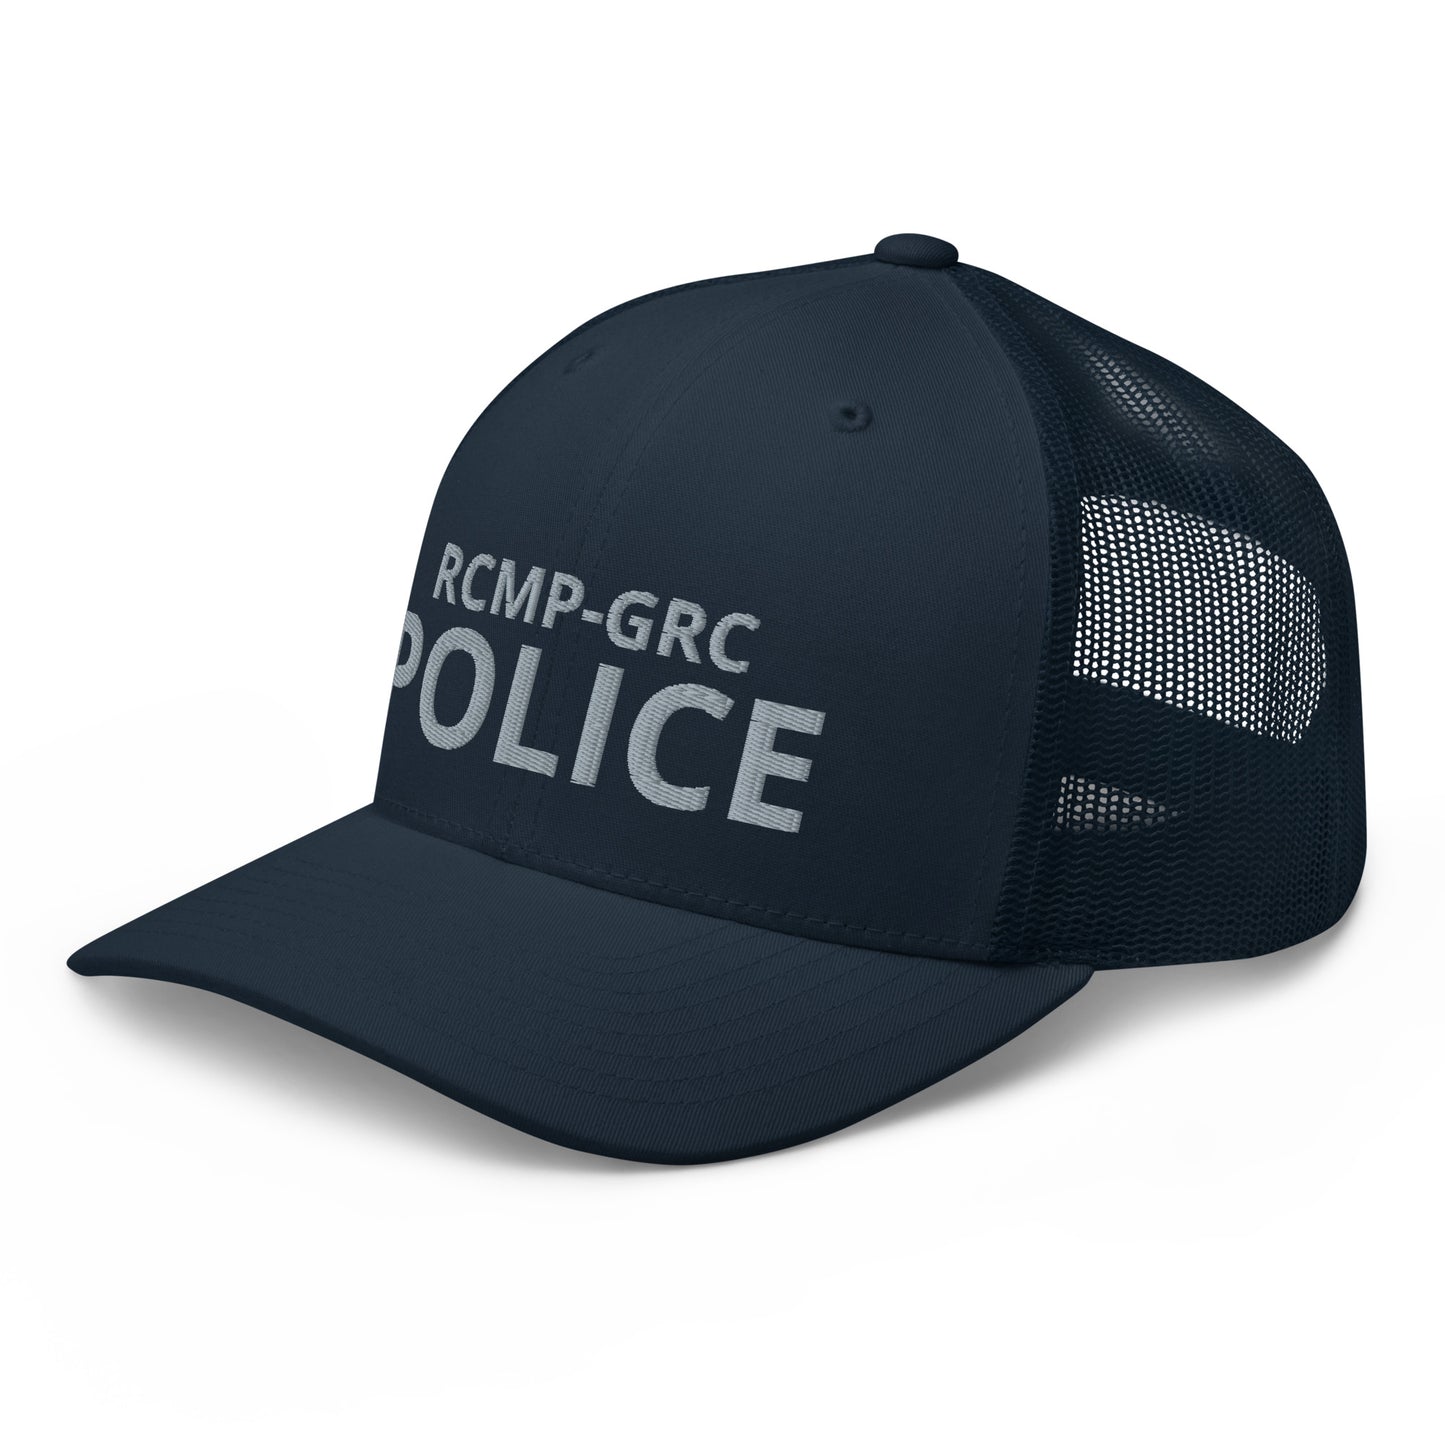 Royal Canadian Mounted Police (RCMP-GRC) Duty Mesh Snapback Ballcap